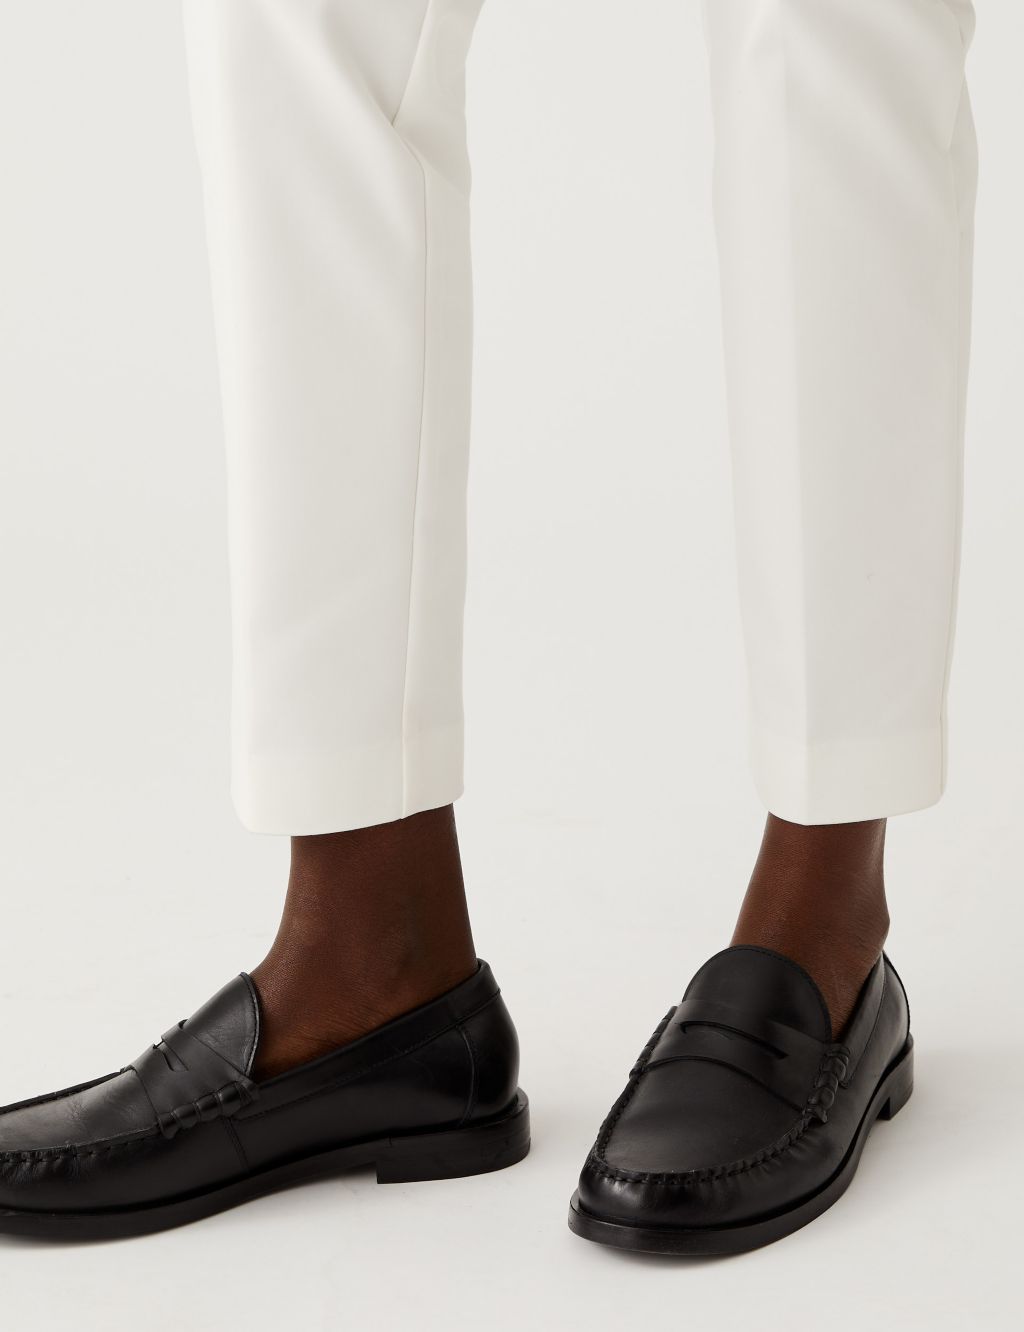 Cotton Blend Slim Fit Ankle Grazer Trousers image 3